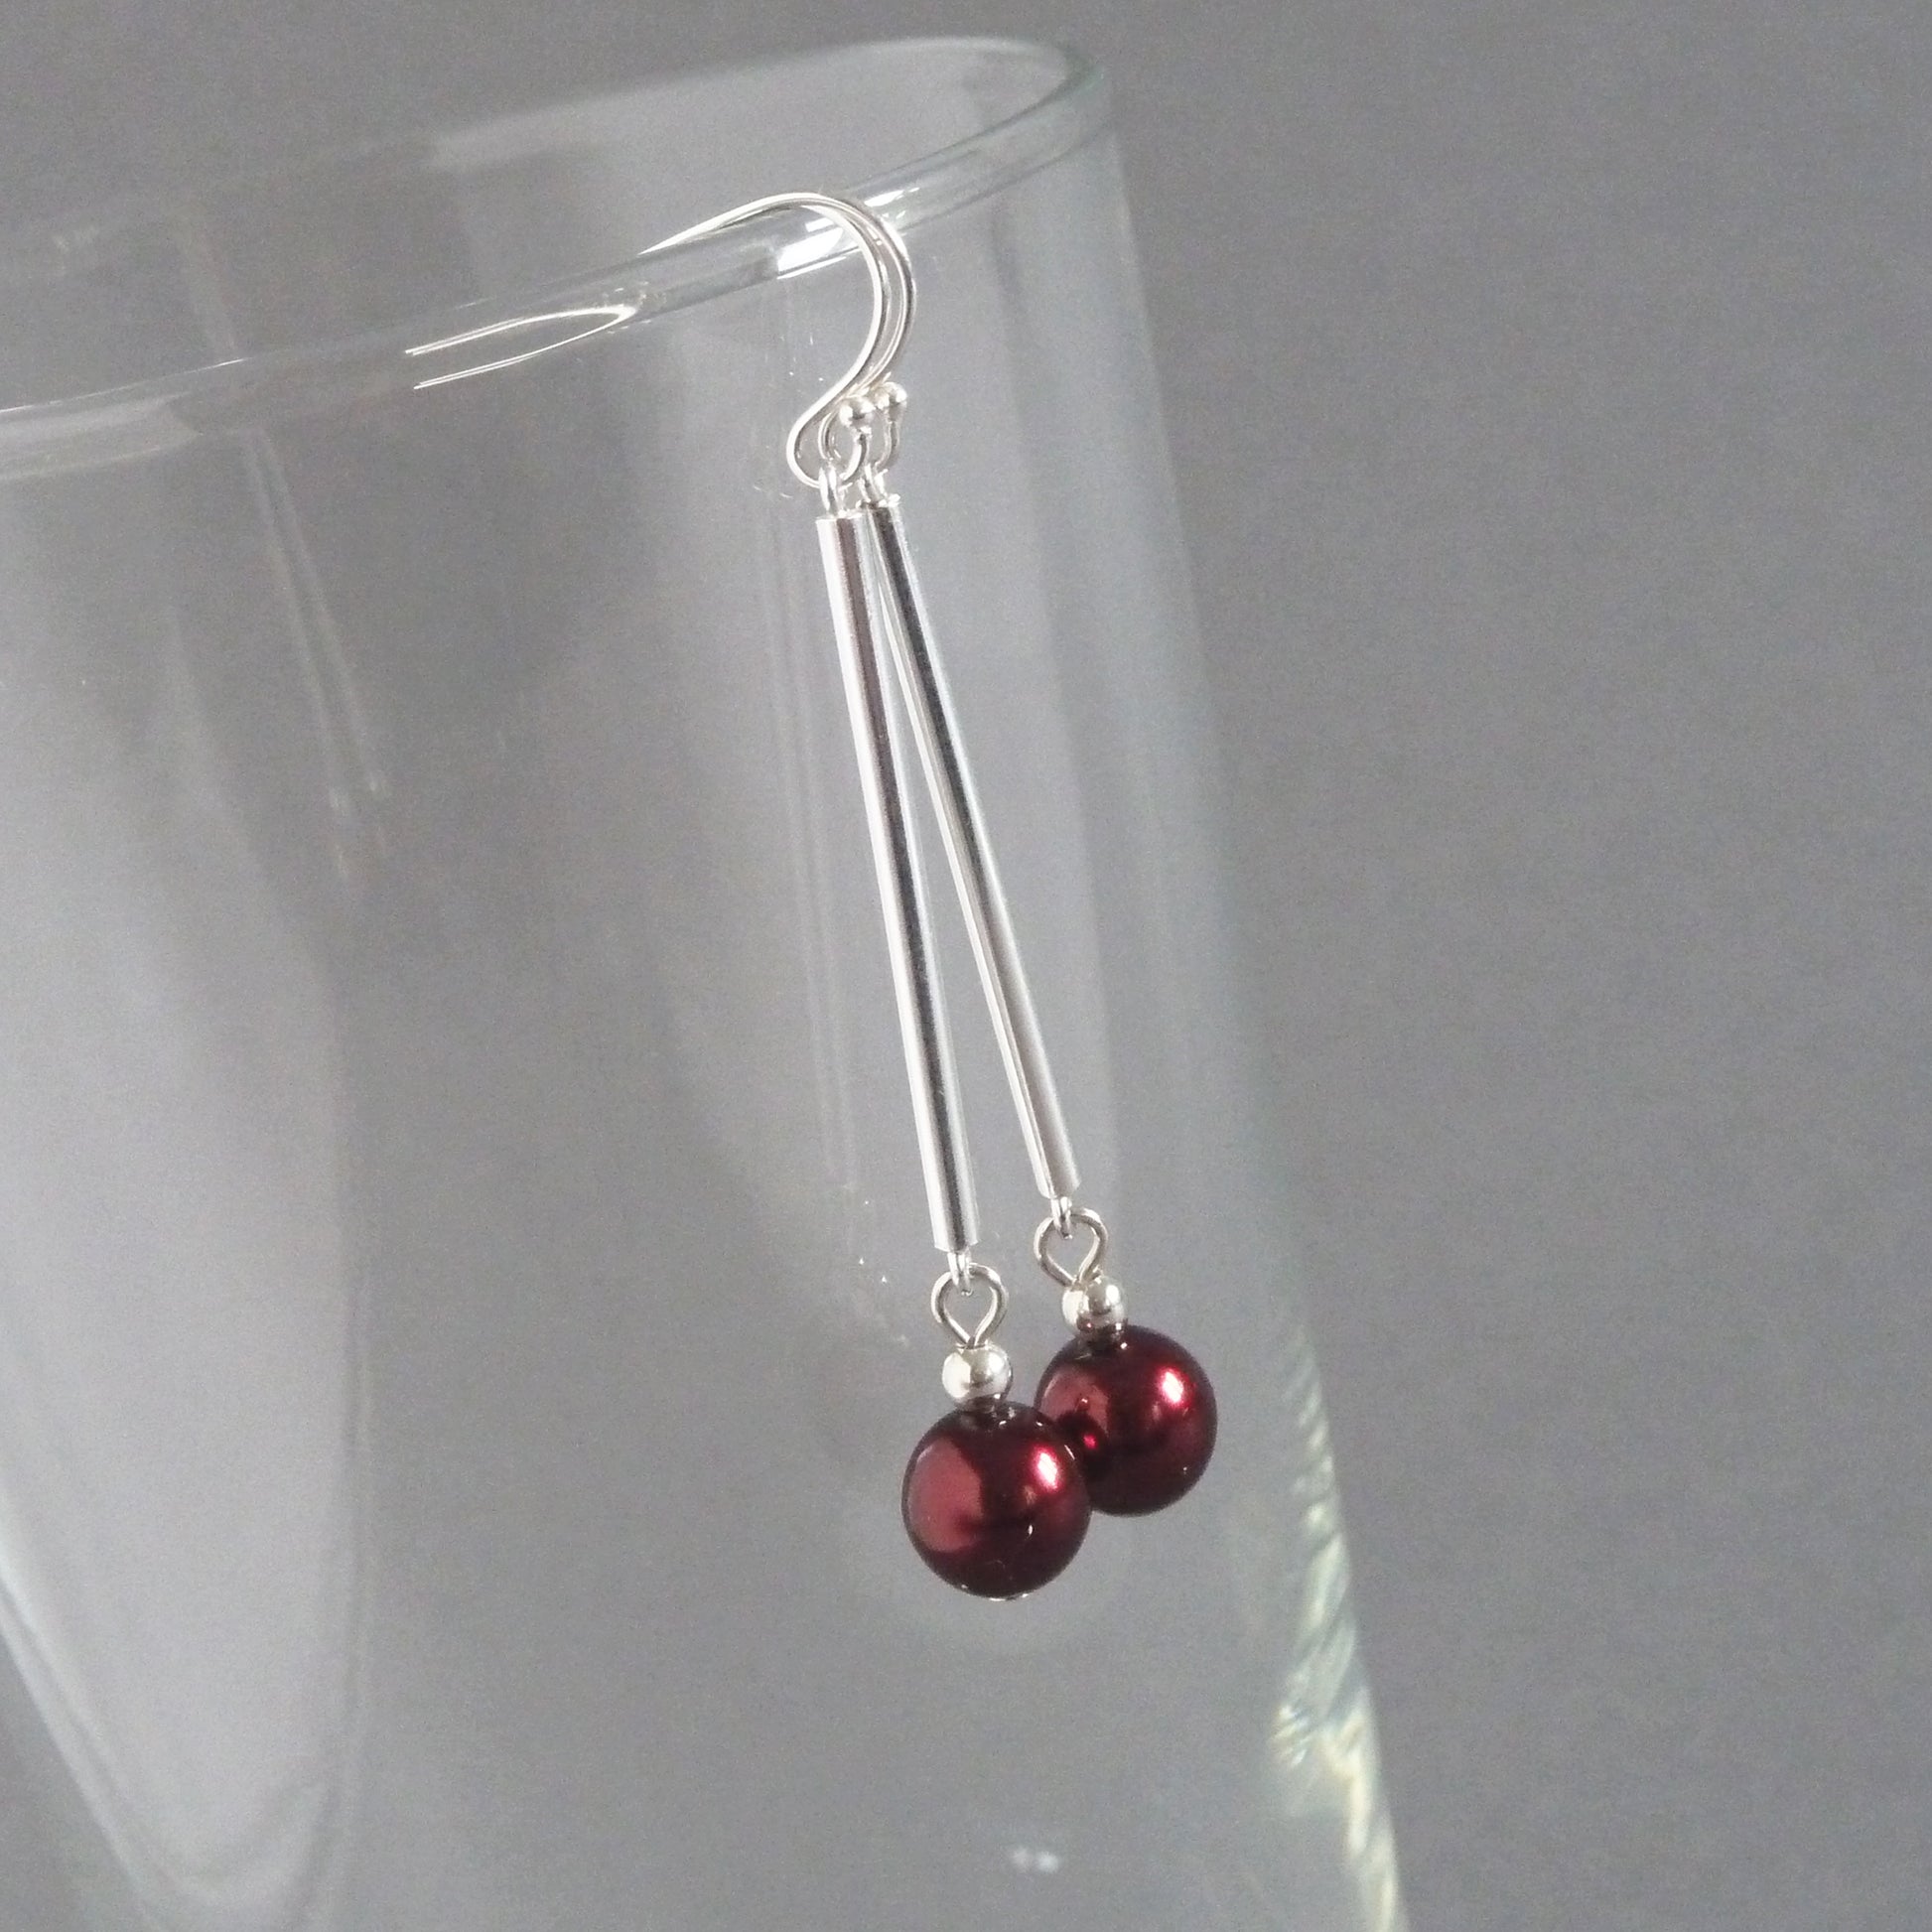 Burgundy pearl and Sterling silver bar earrings